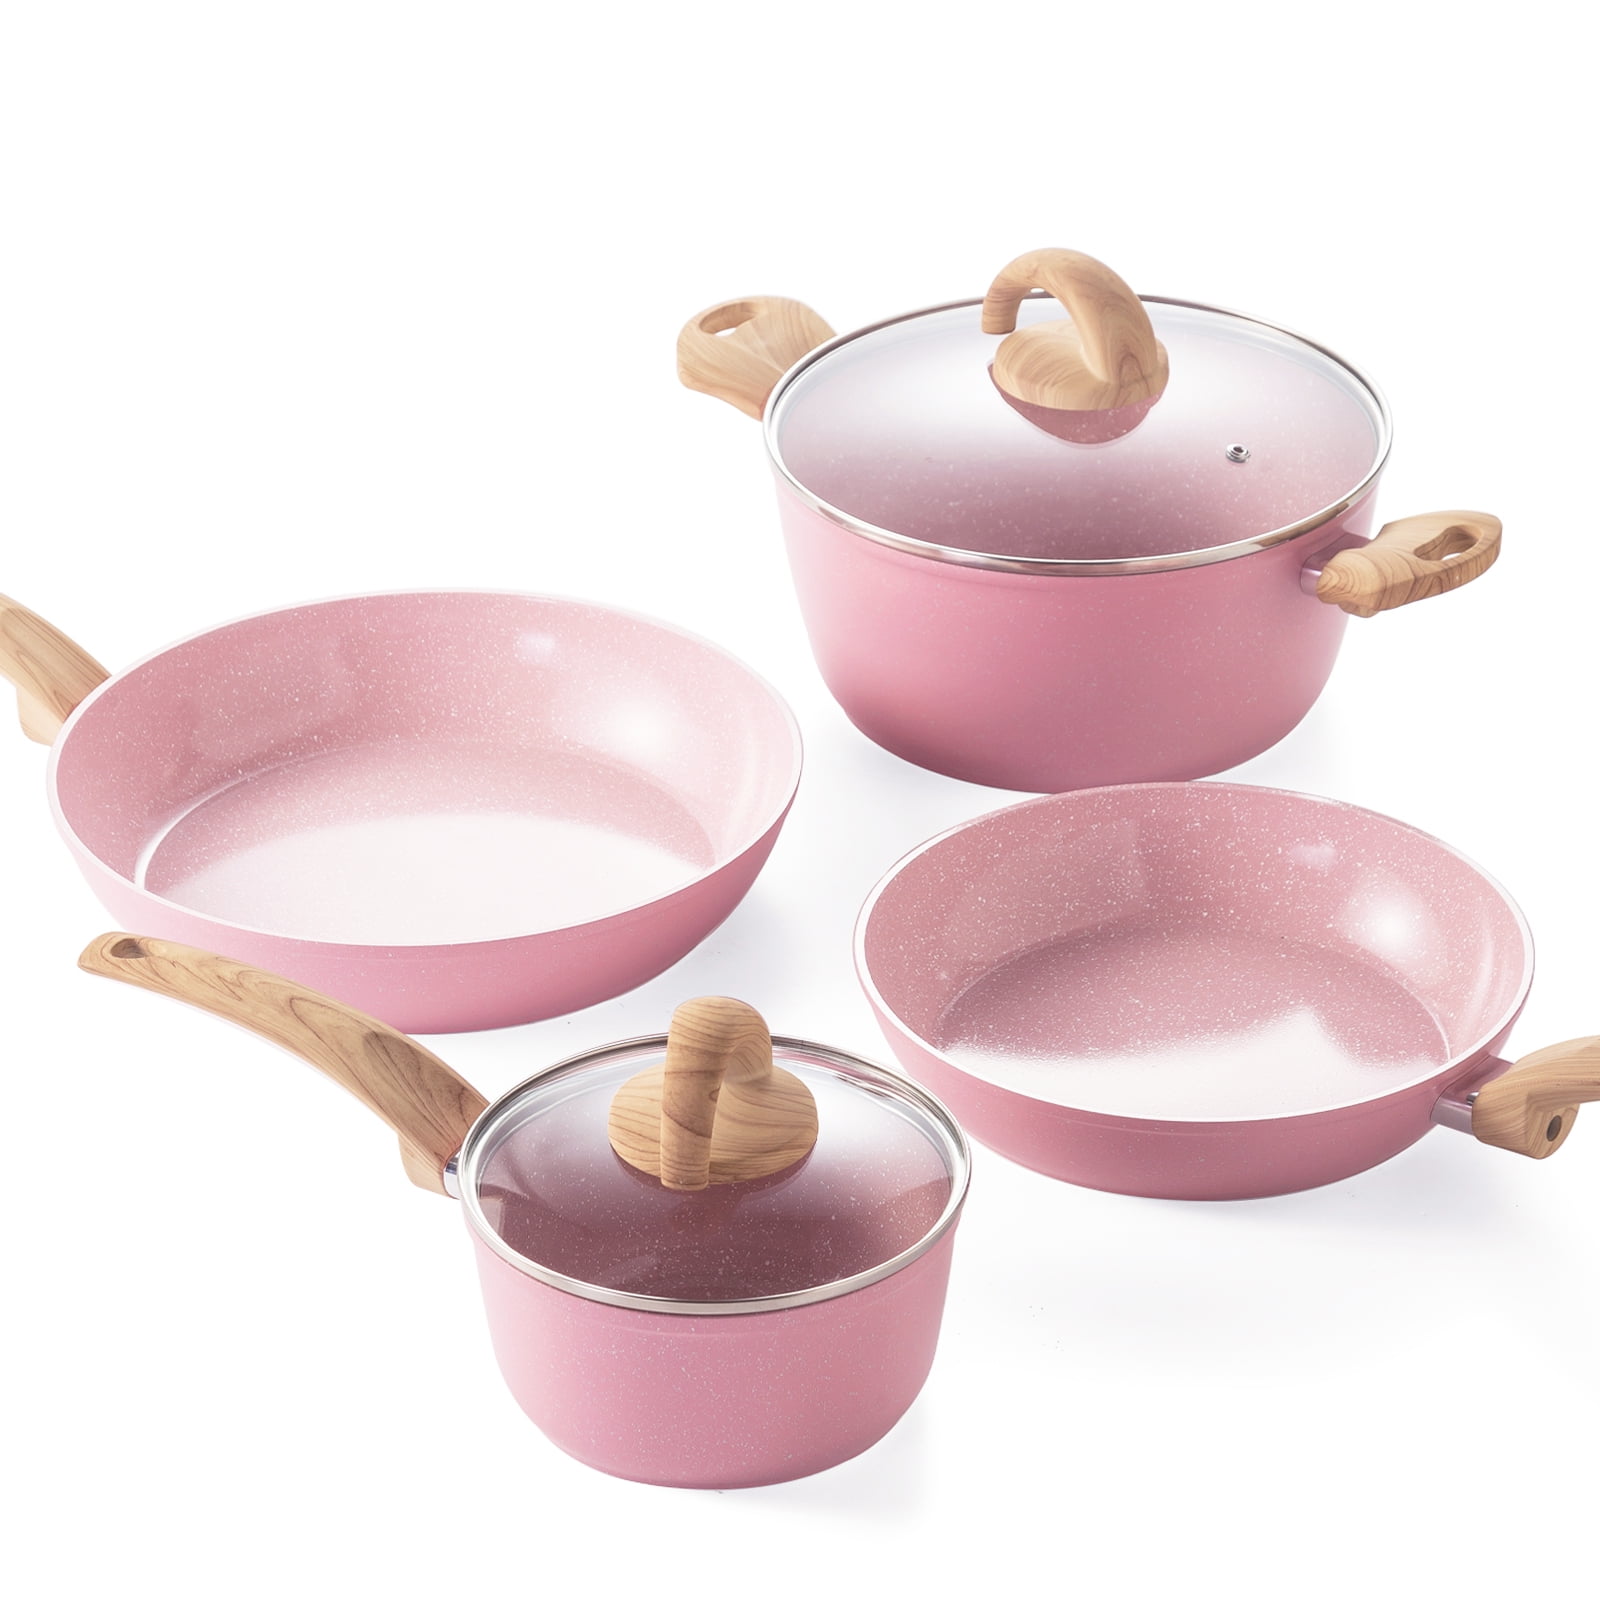 Vkoocy Pink Pots and Pans Set Non Stick, Ceramic Cookware Set Non-Toxic Kitchen  Cooking Sets Induction Granite Pot and Pan, PTFE/PFOA/PFOS-Free 